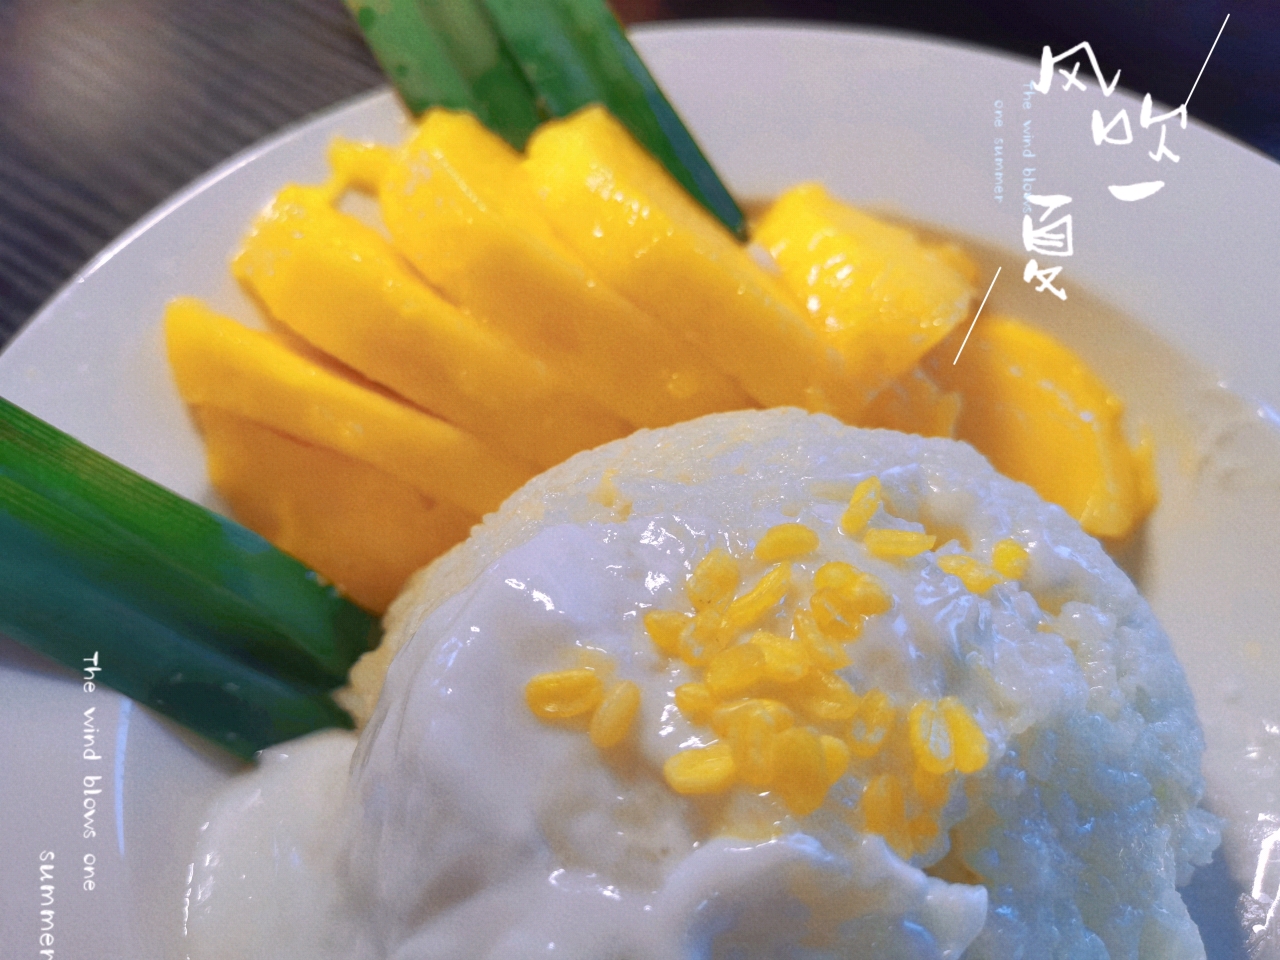 翻滚吧大厨—泰式芒果糯米饭厨<Coconut Sticky Rice with Mango>